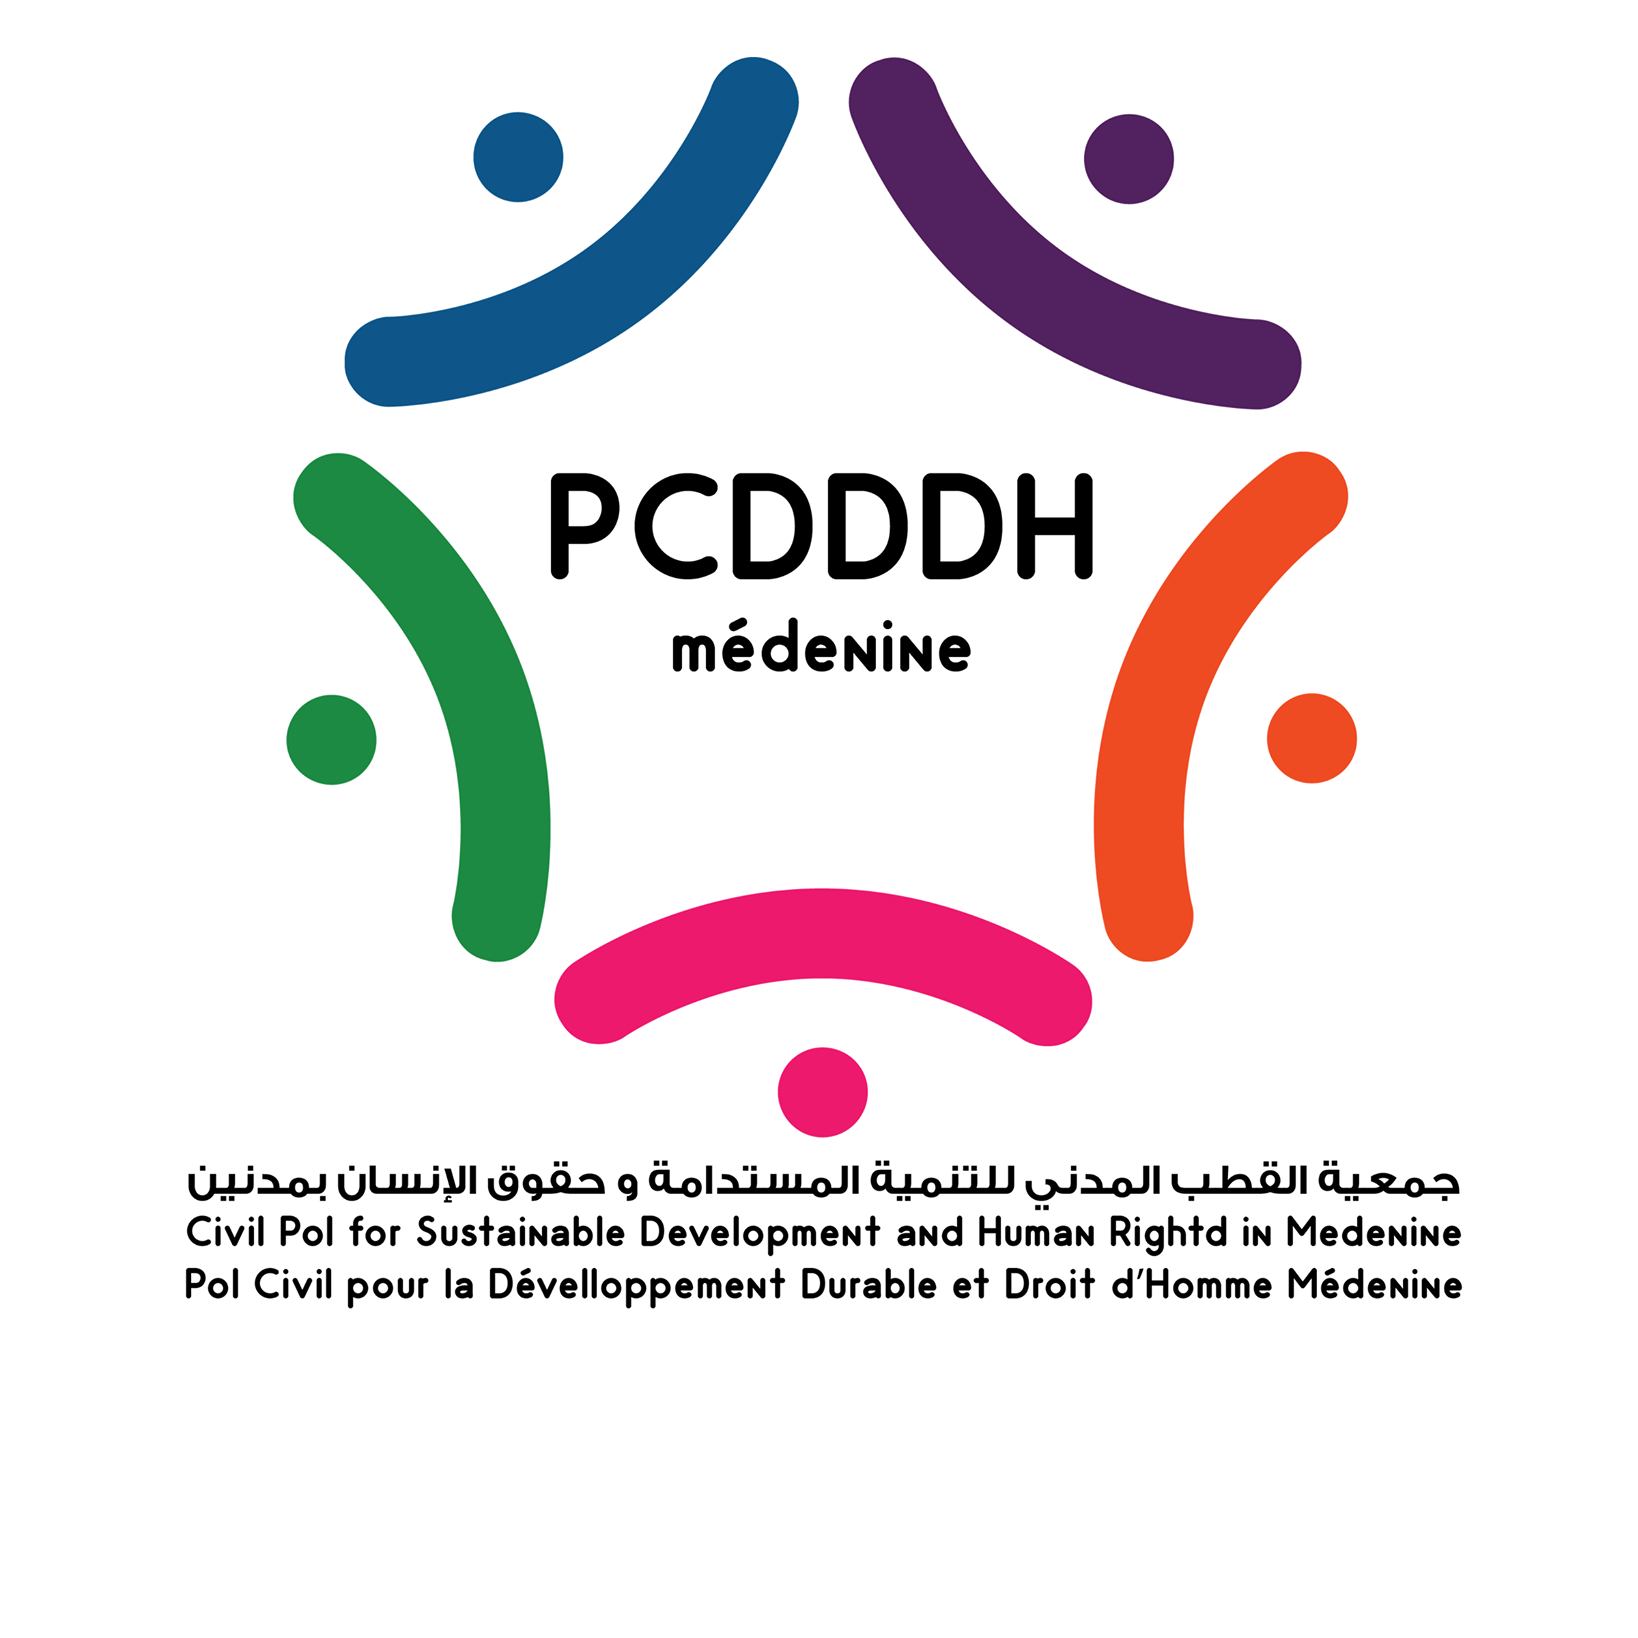 PCDDH